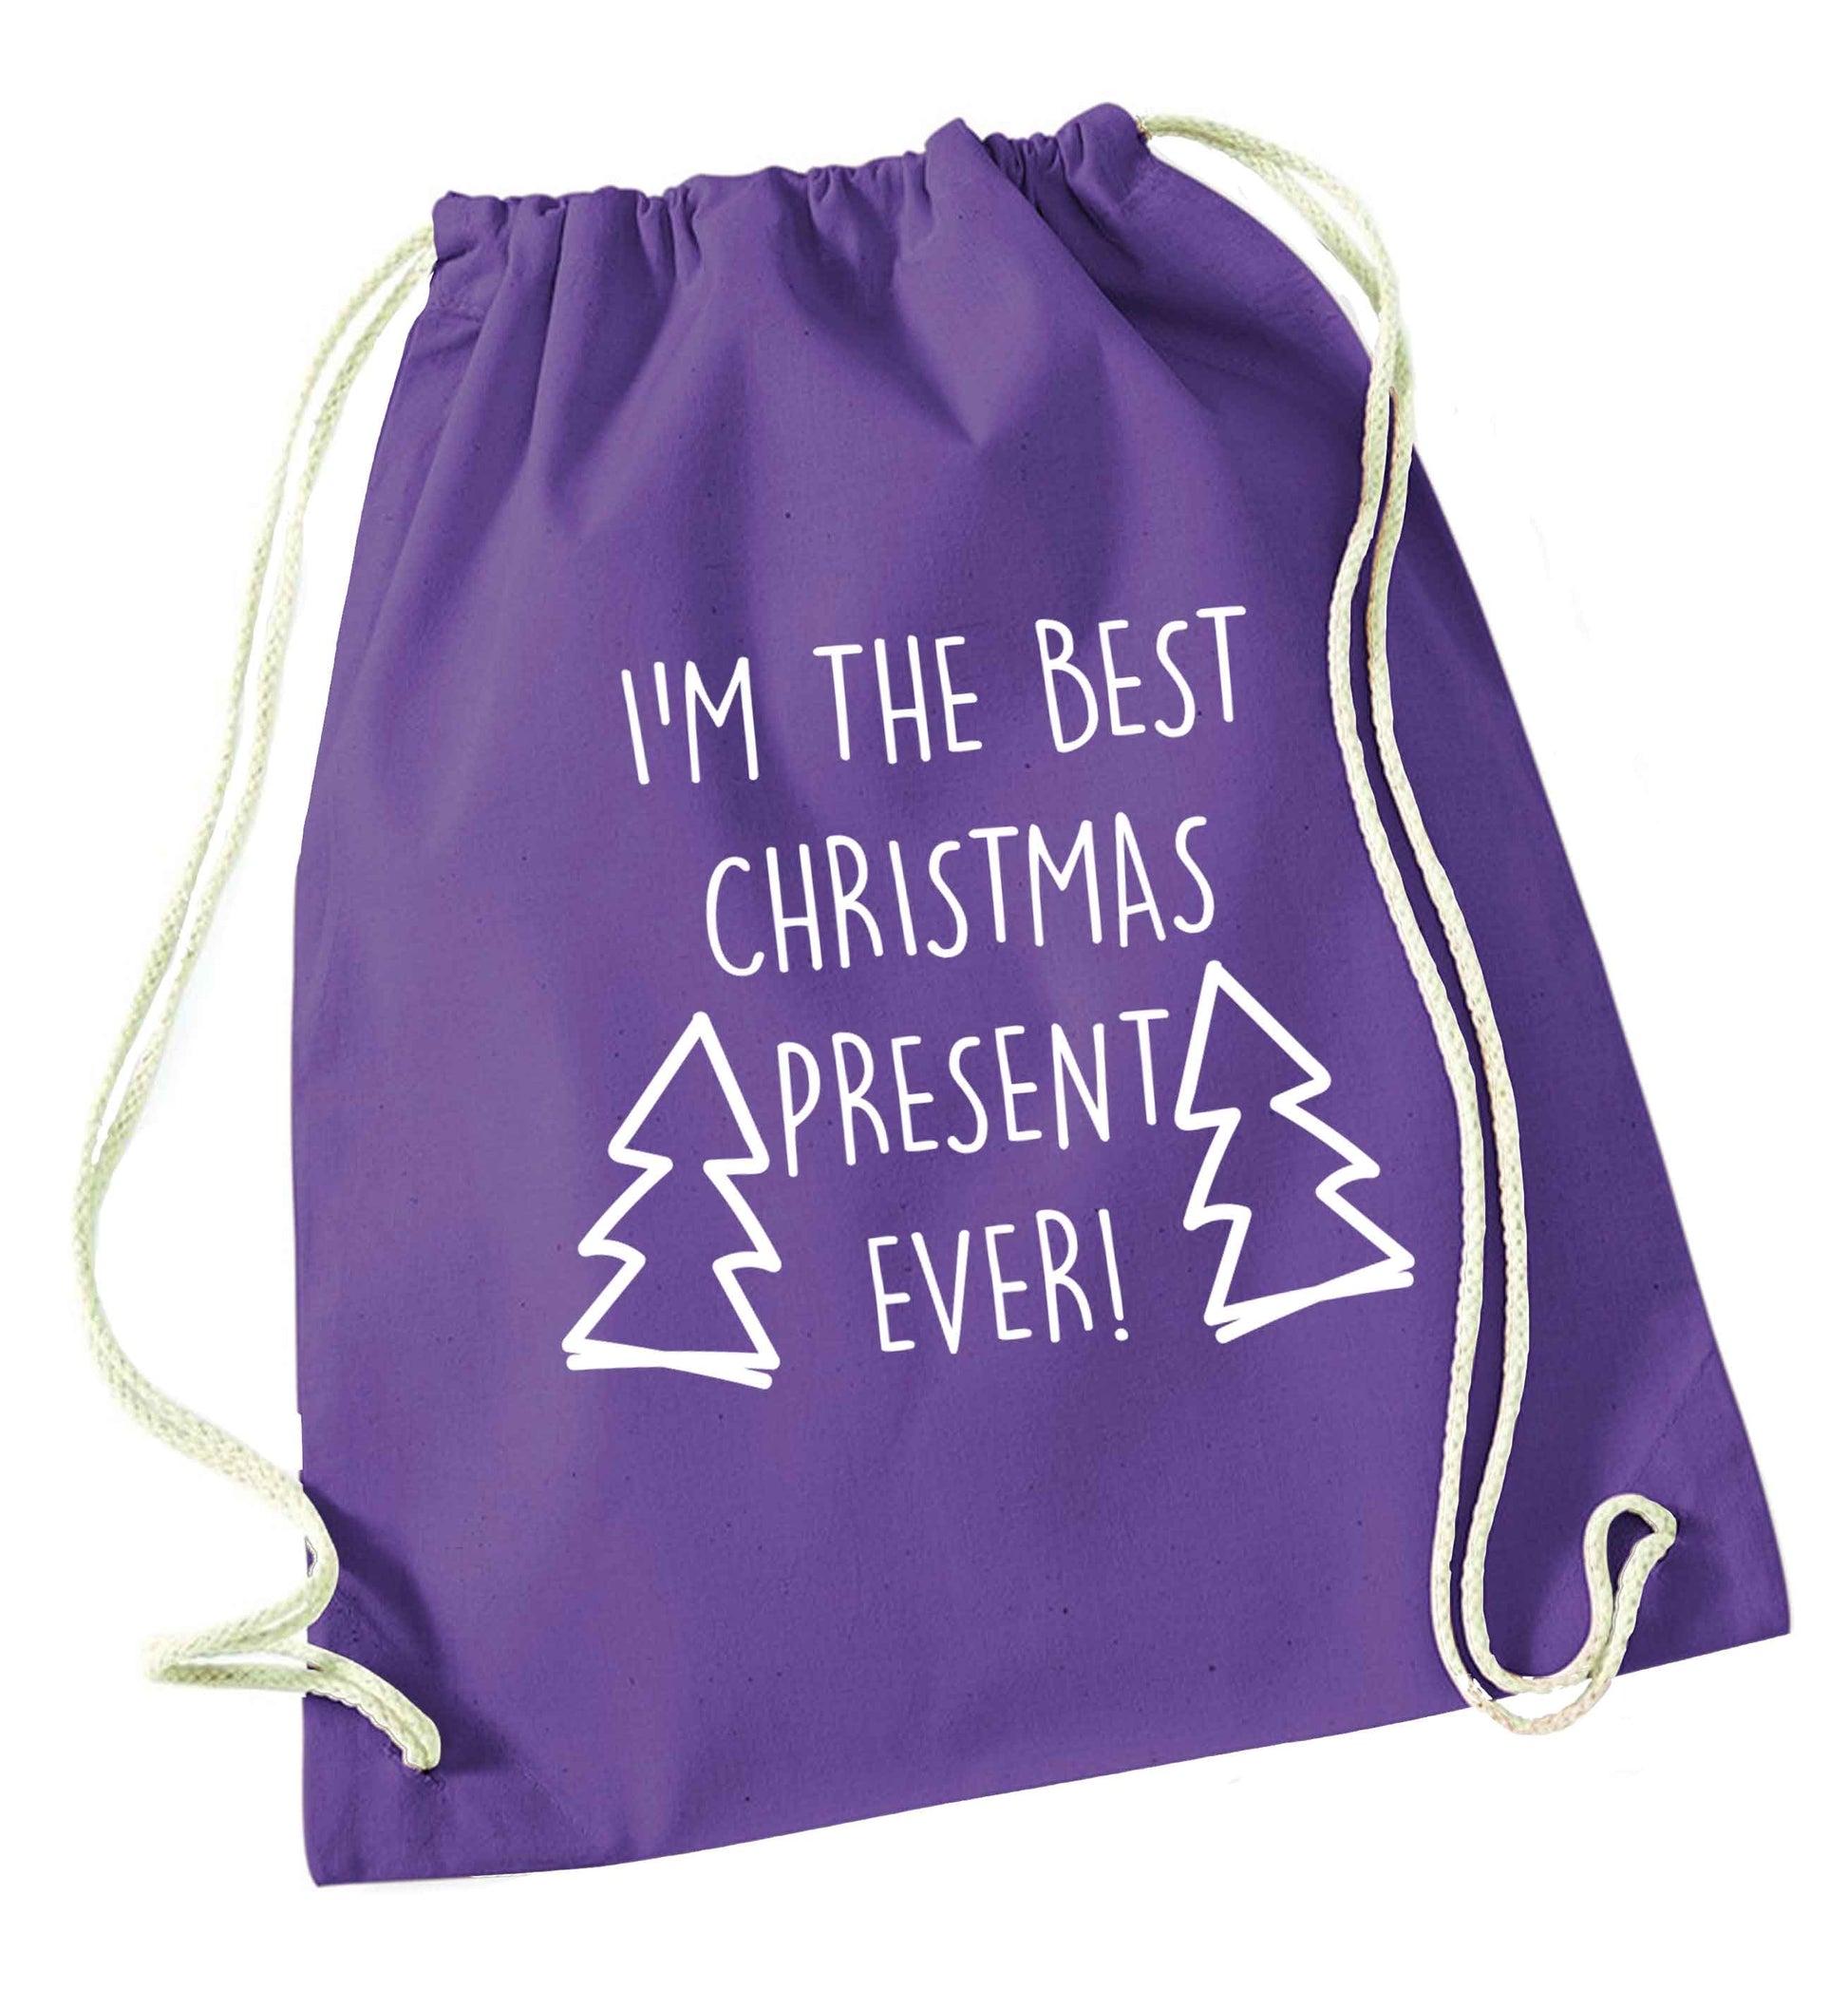 I'm the best Christmas present ever purple drawstring bag